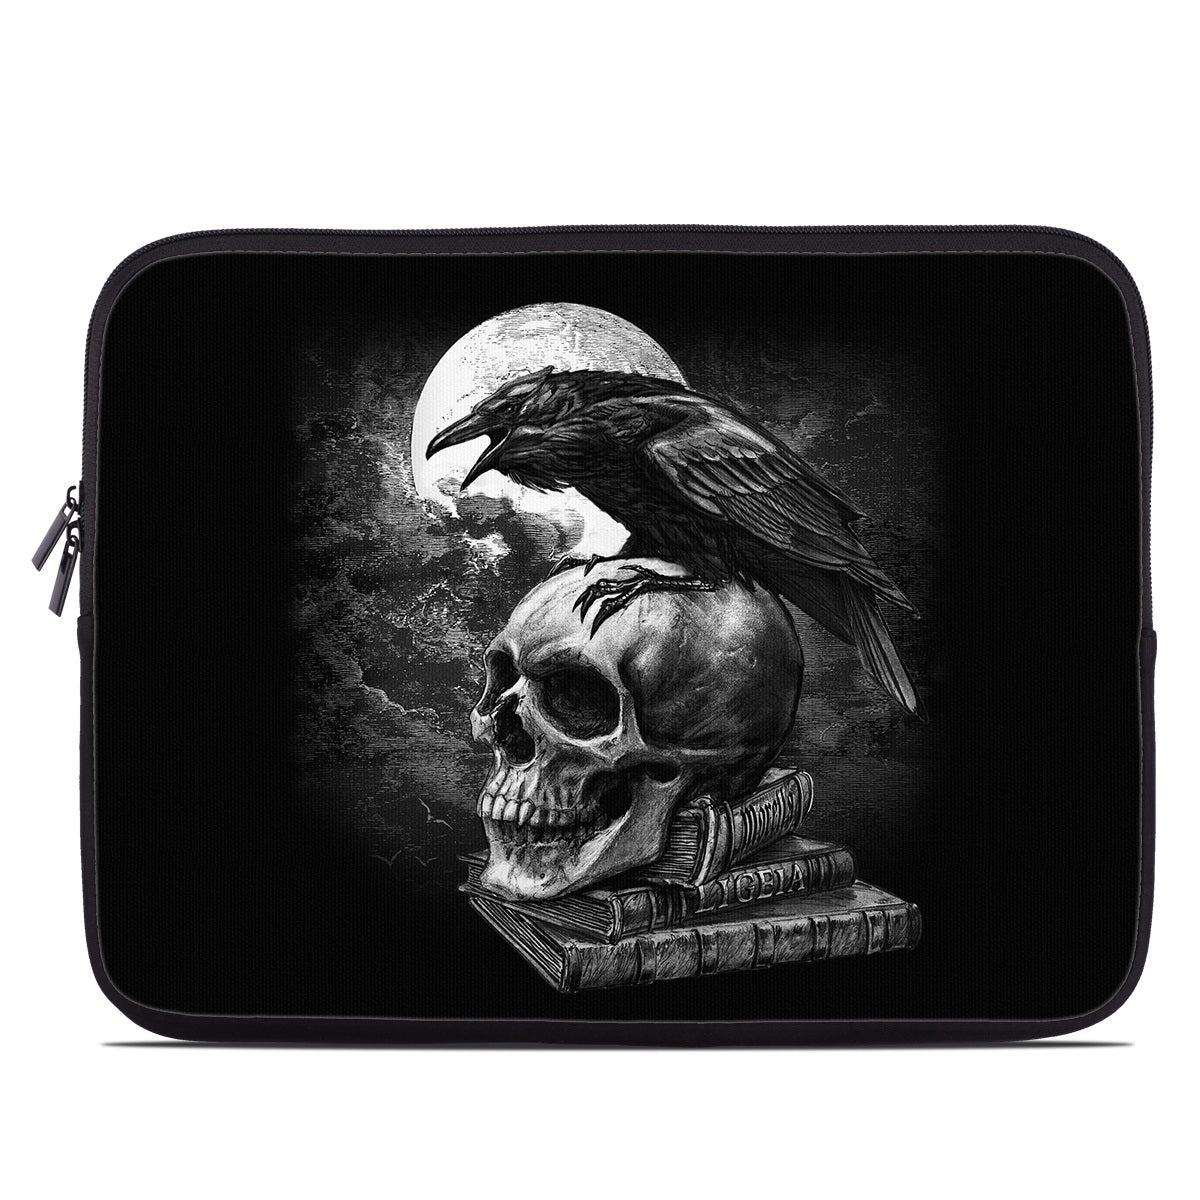 Poe's Raven - Laptop Sleeve